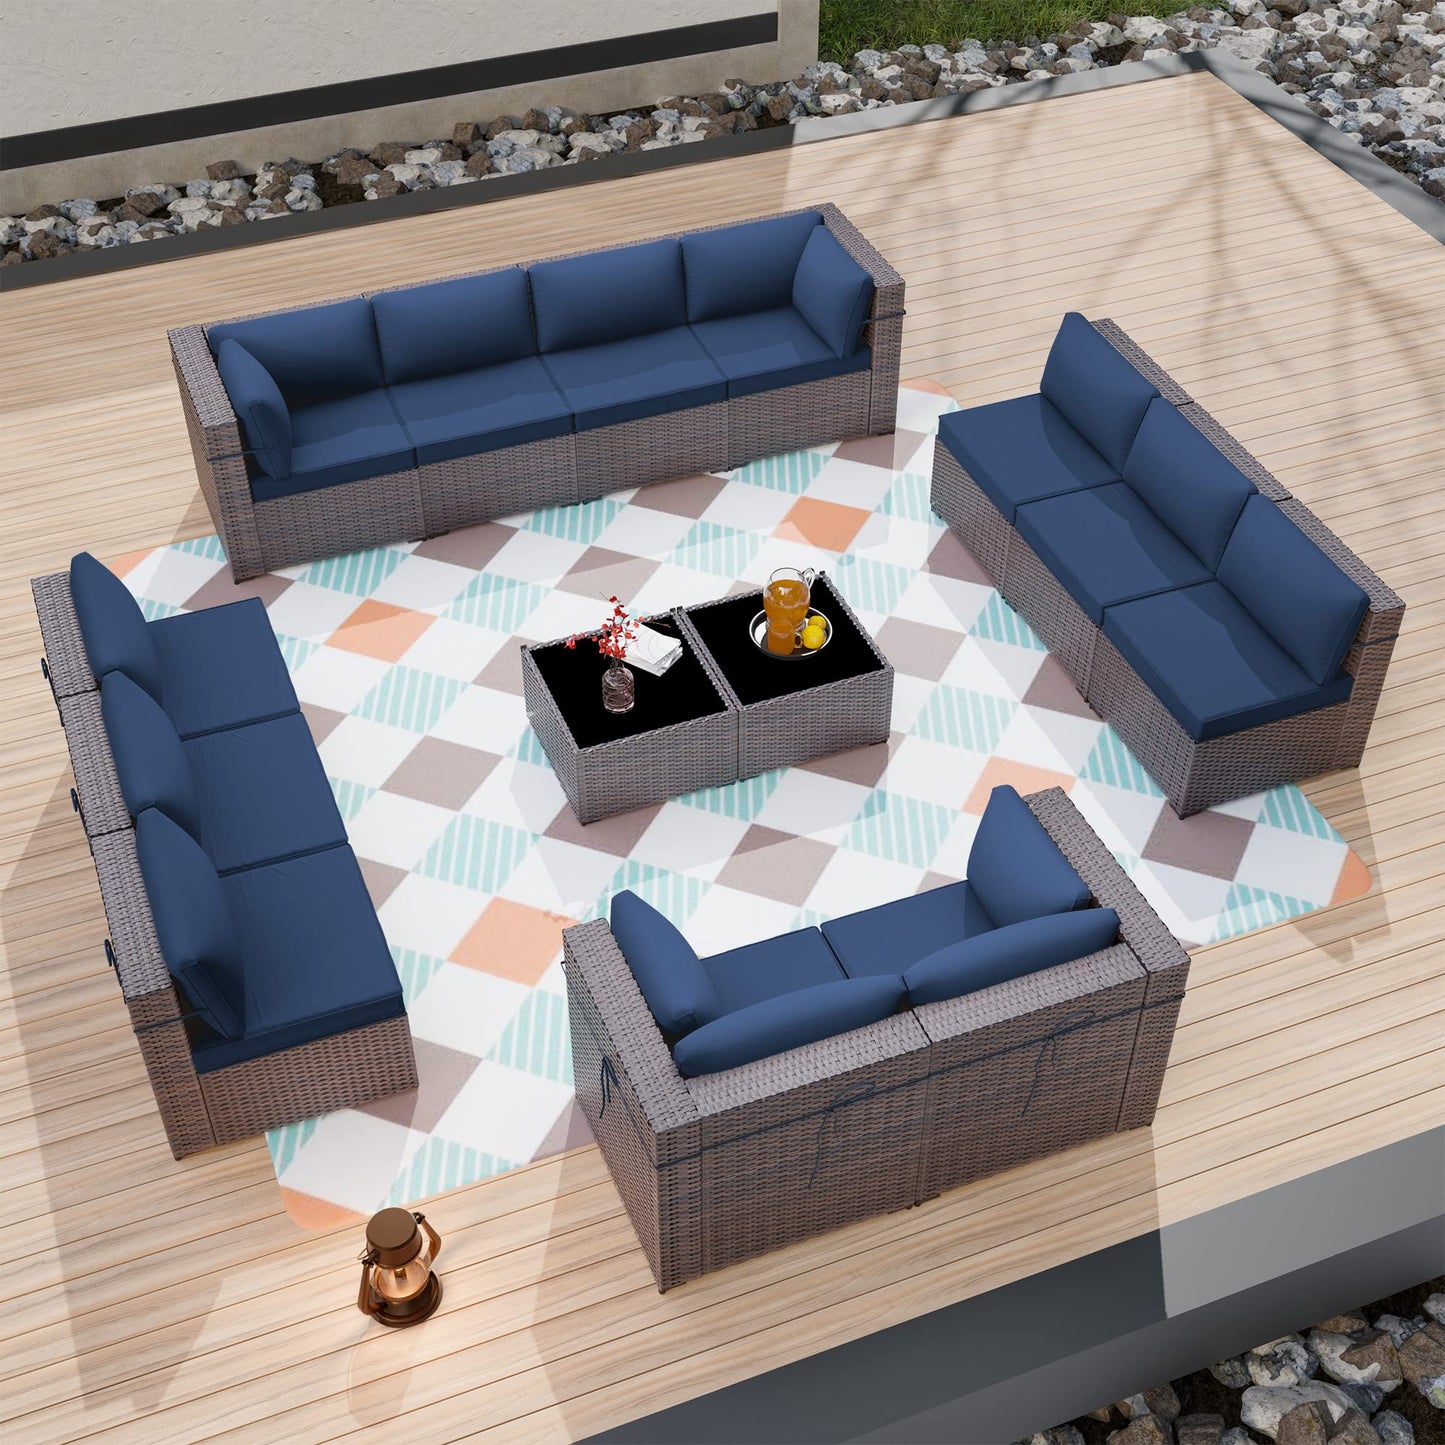 ALAULM 14 Pieces Sectional Sofa Sets, Outdoor Patio Furniture - Dark Blue